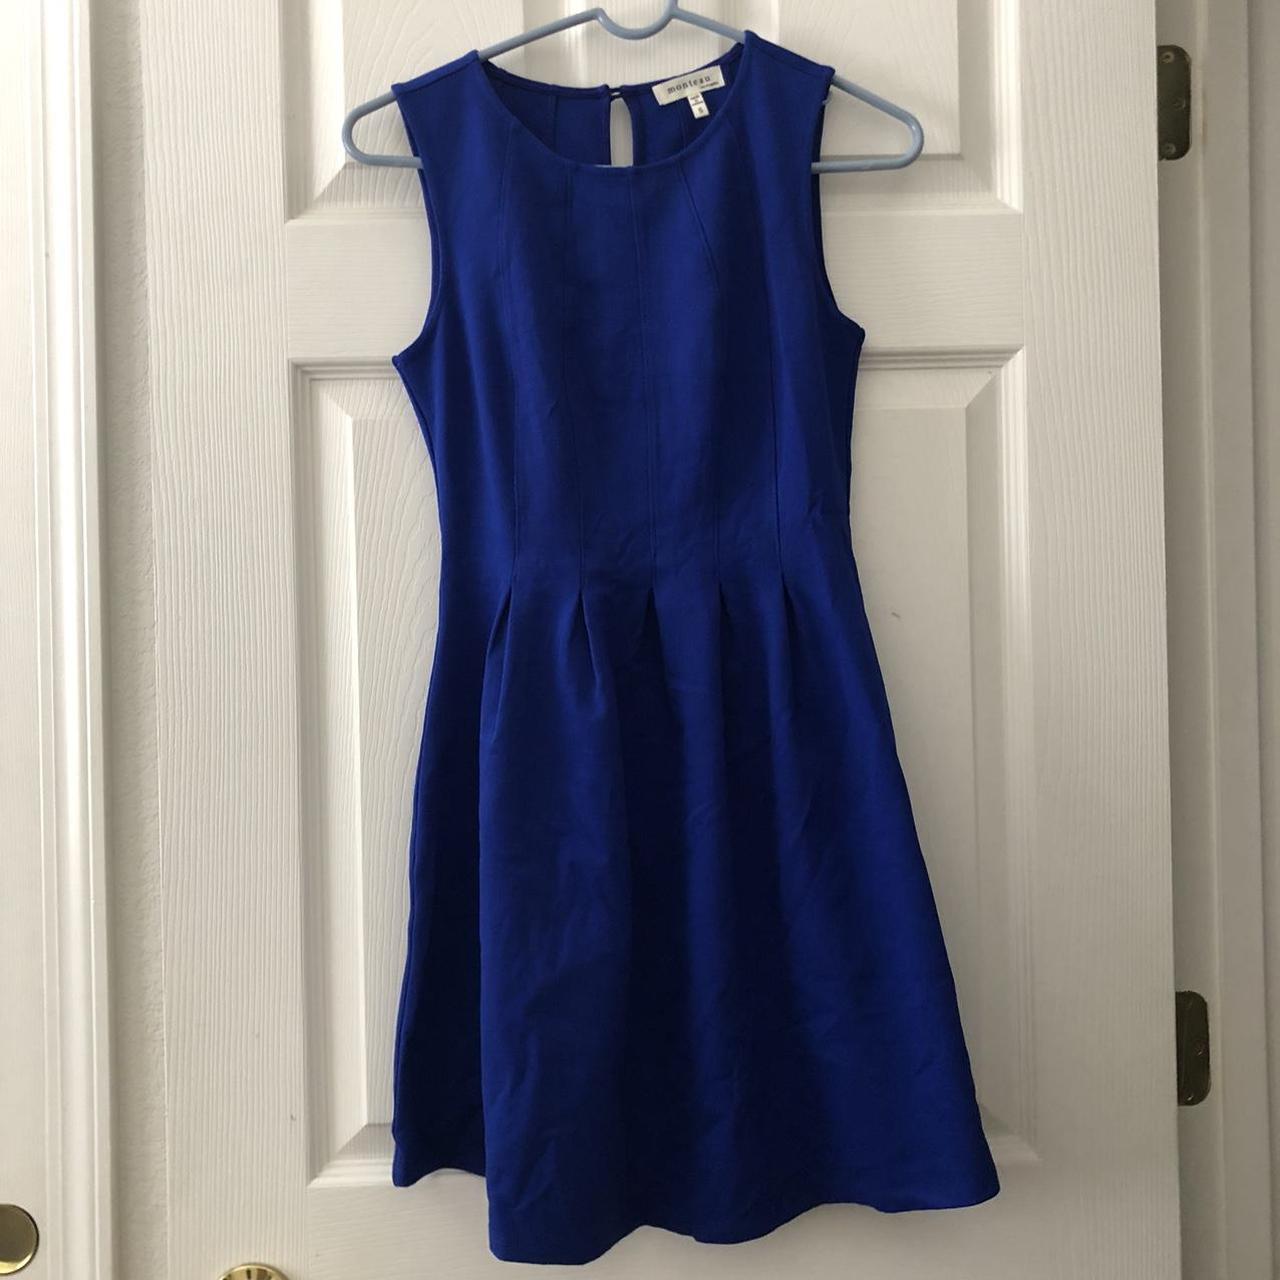 Blue dress in a size small. Never worn *DEPOP... - Depop